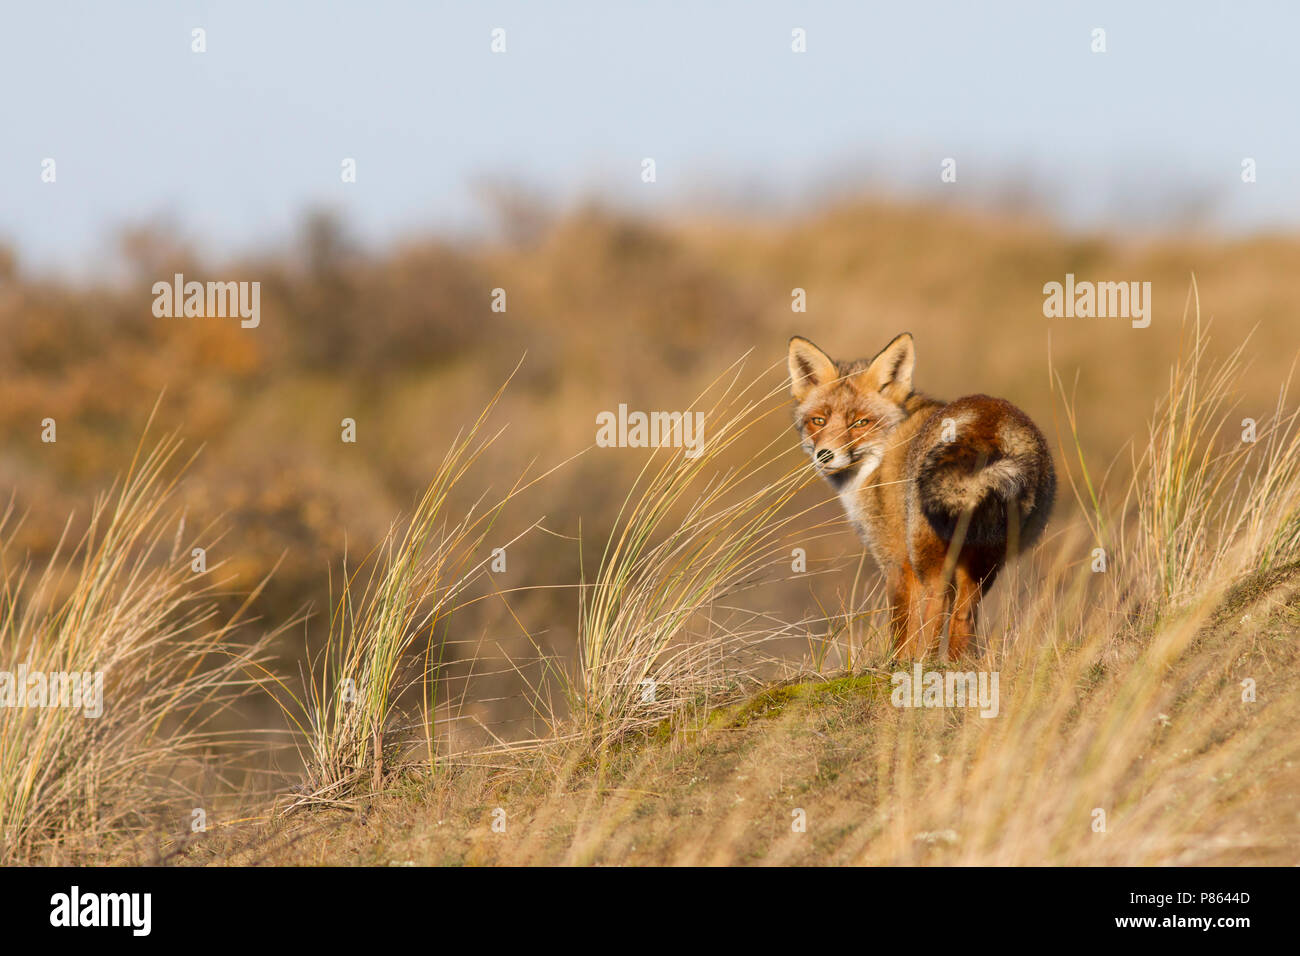 vos in duin, red fox in dune; Stock Photo